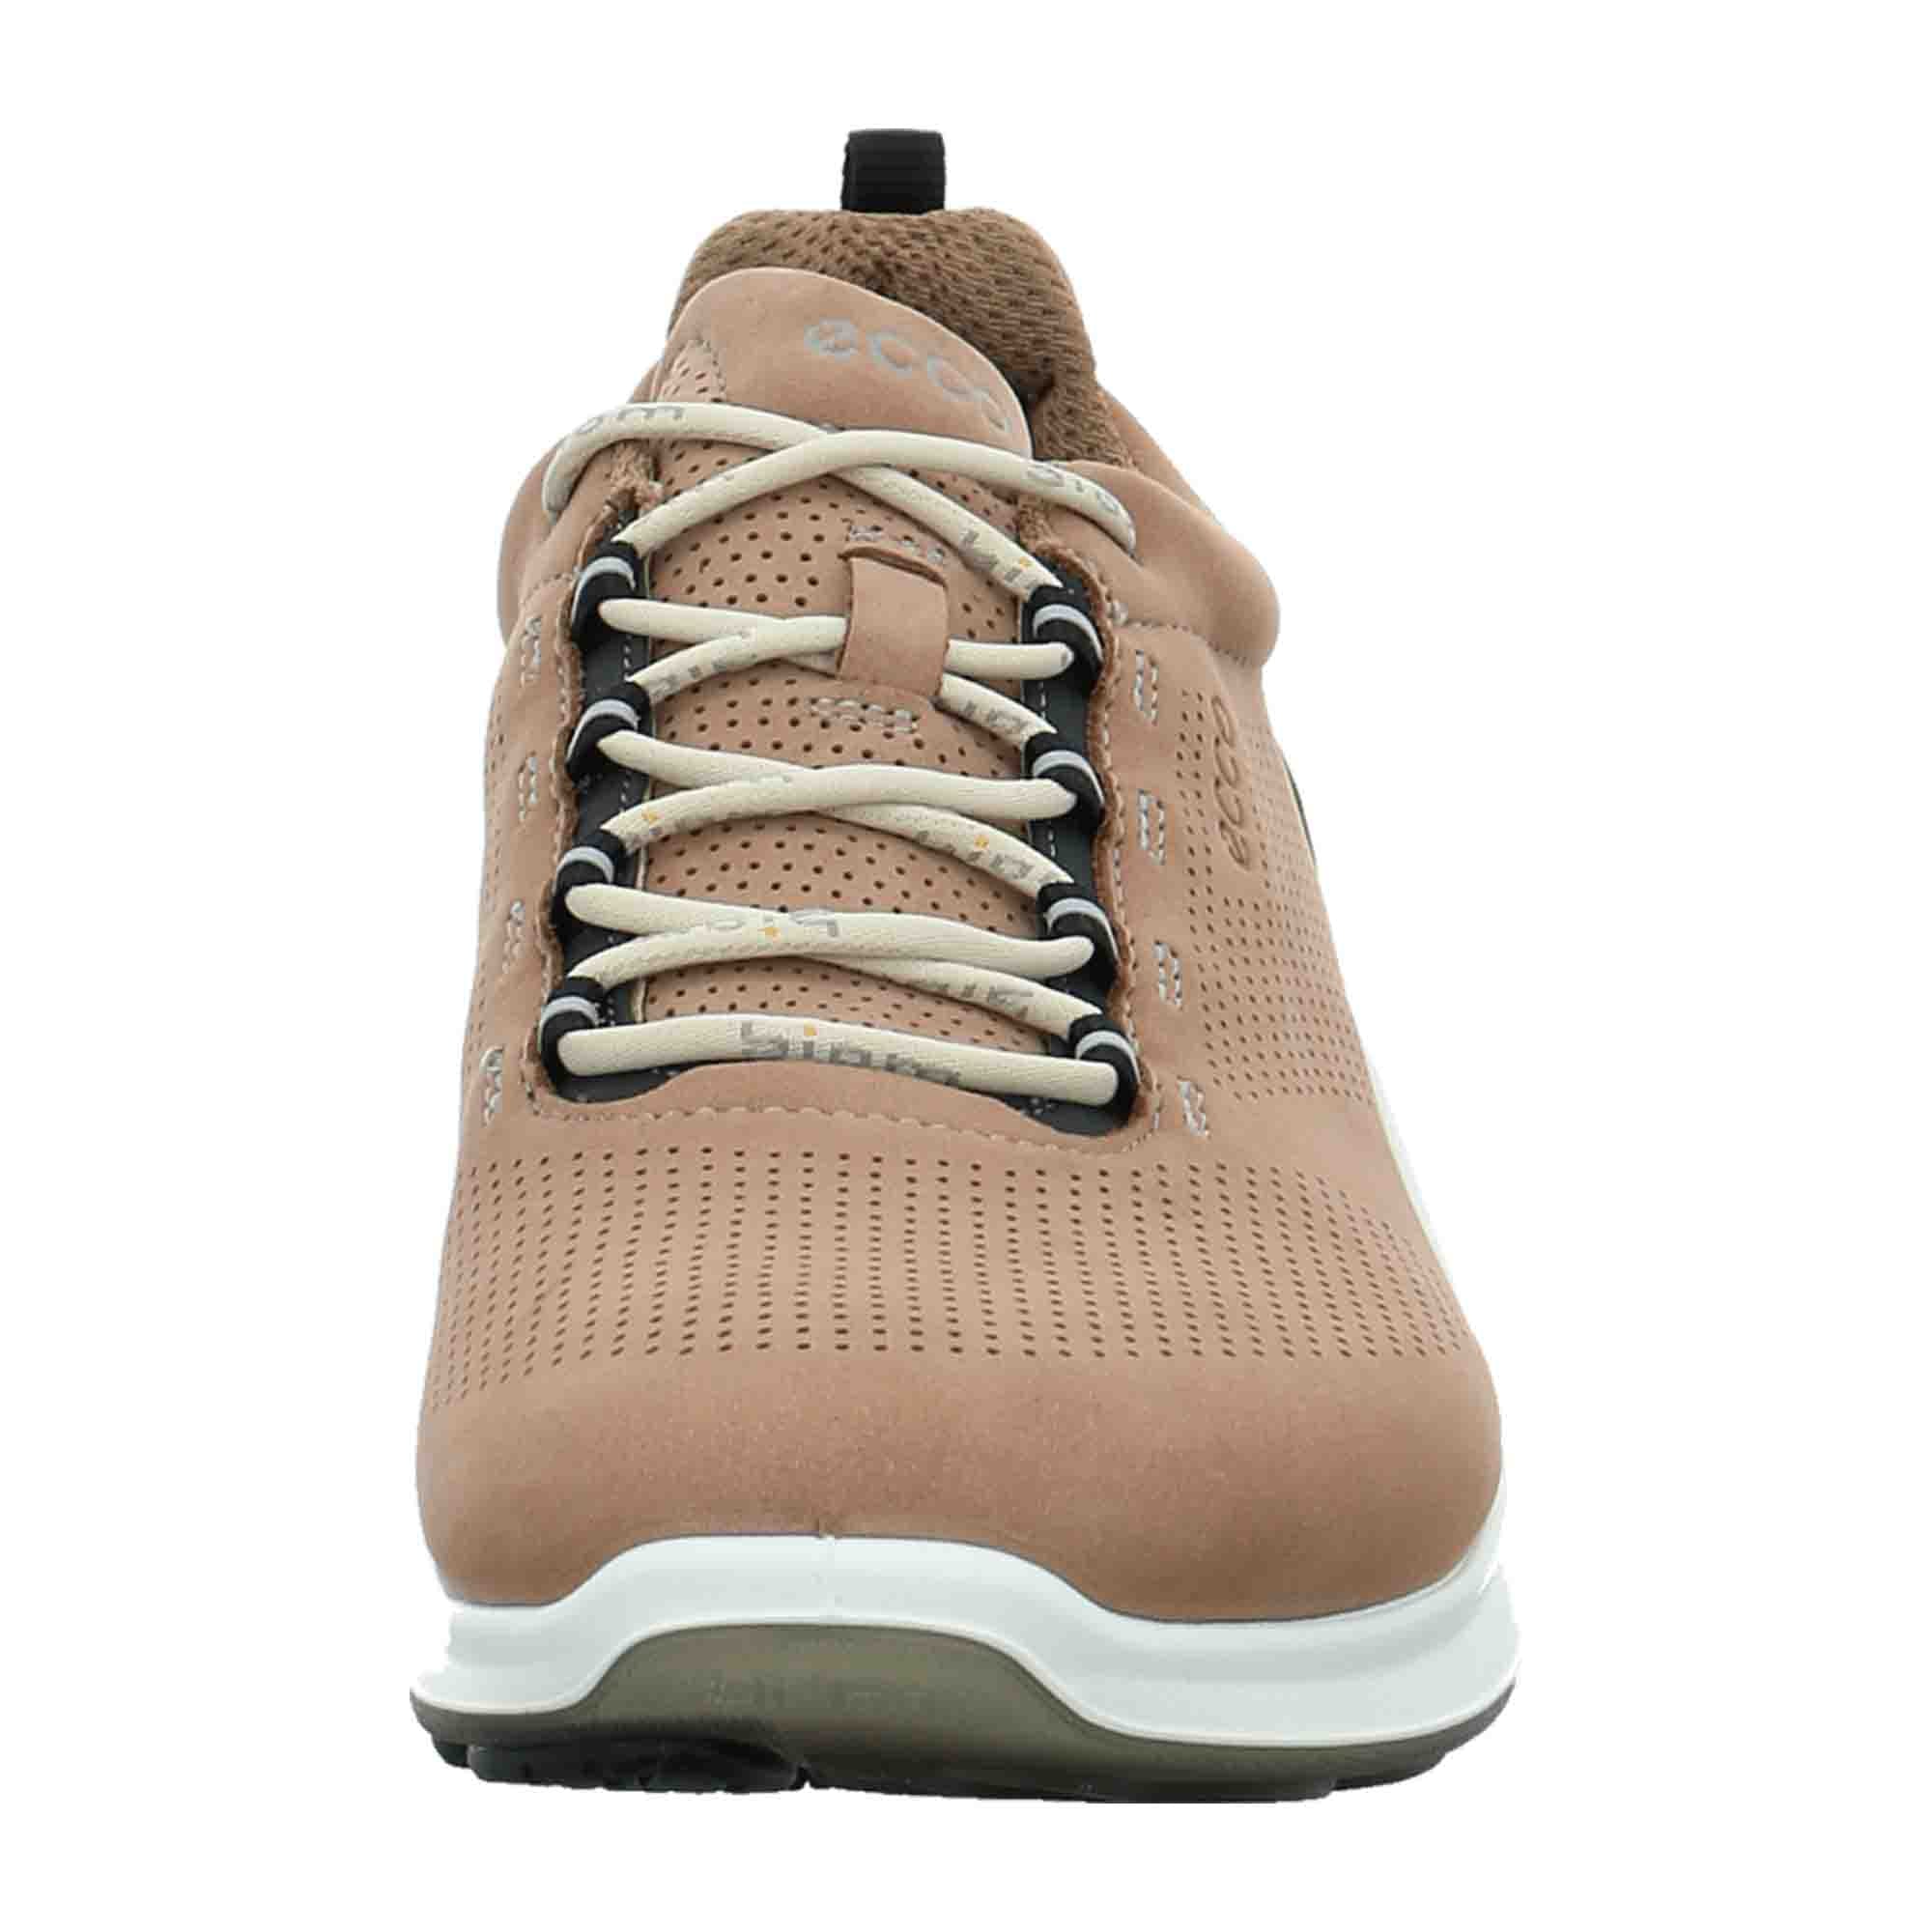 Ecco Men's Beige Outdoor Shoes - Durable & Stylish